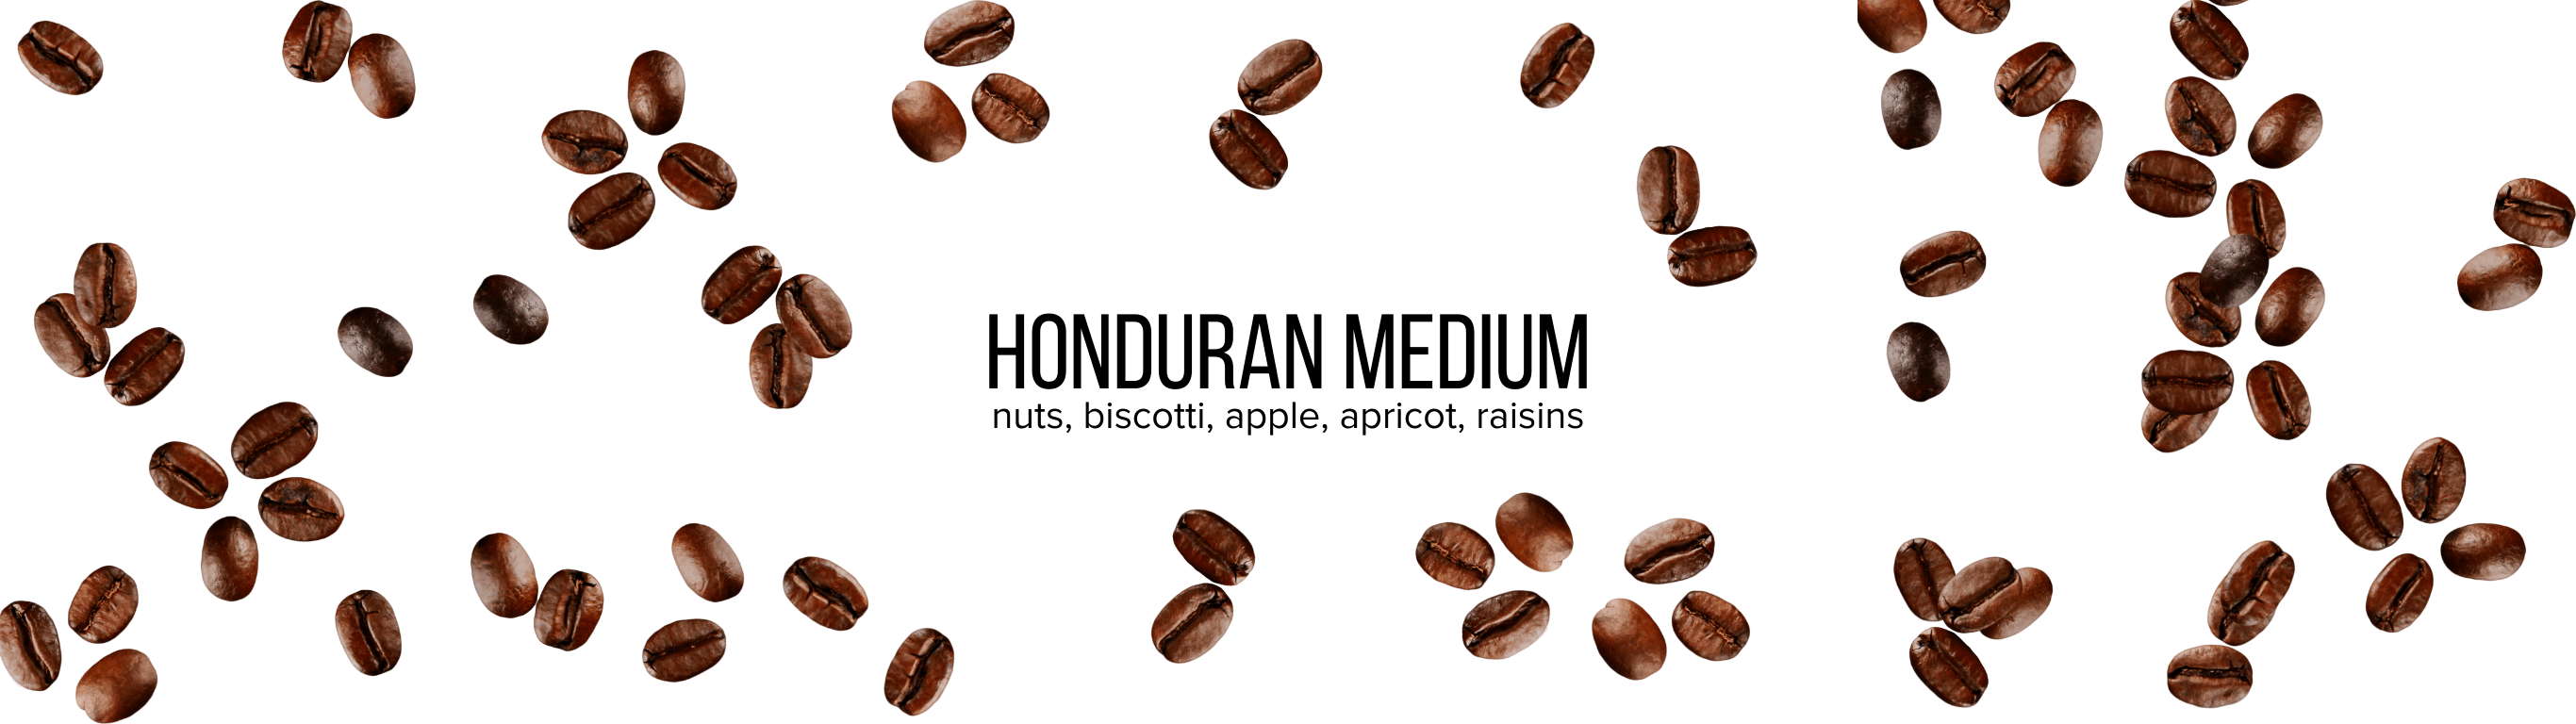 Honduran Medium Coffee Subscription Header